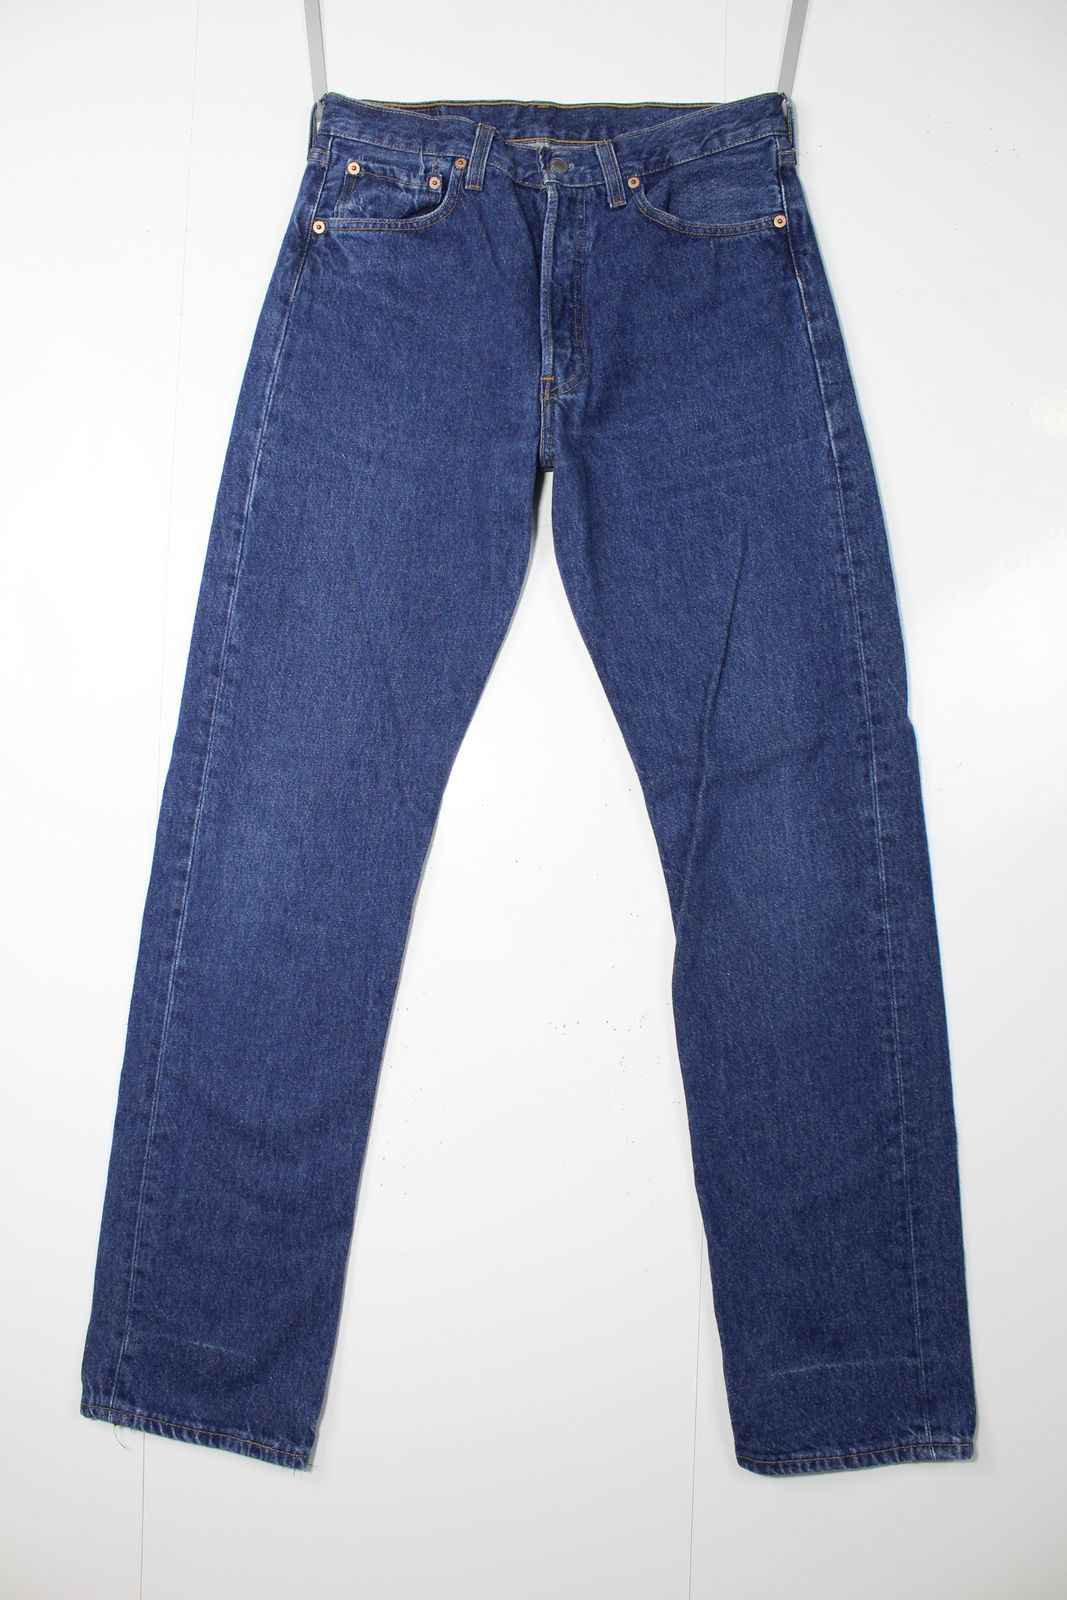 Levi's 501 Denim W32 L34 Made In USA Jeans Vintage